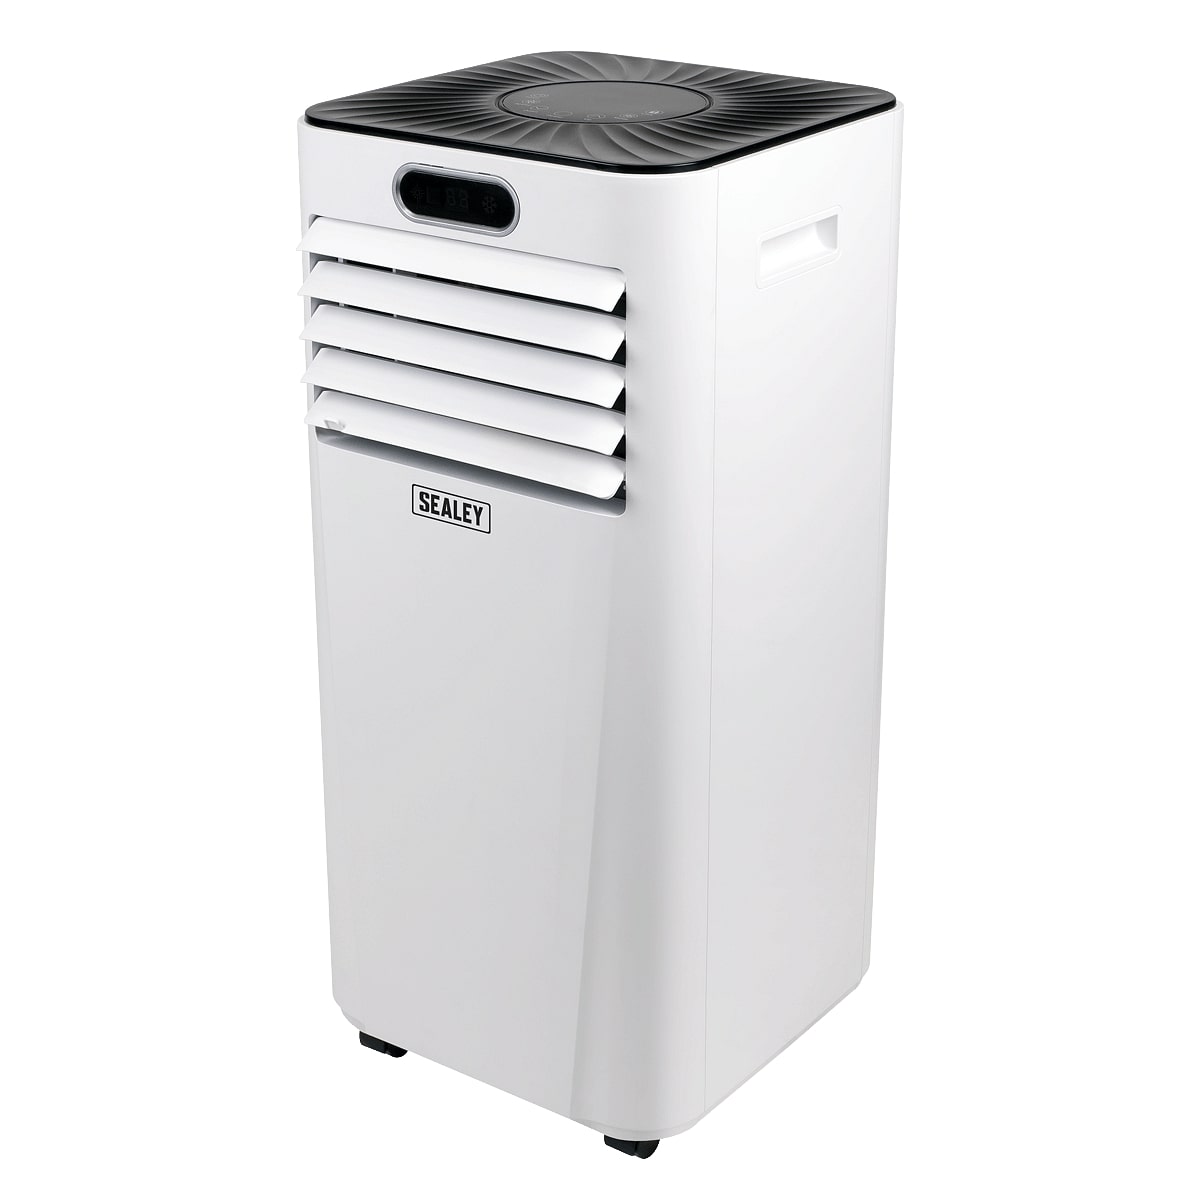 Sealey SAC7000 Portable Air Conditioner, Dehumidifier and Air Cooler